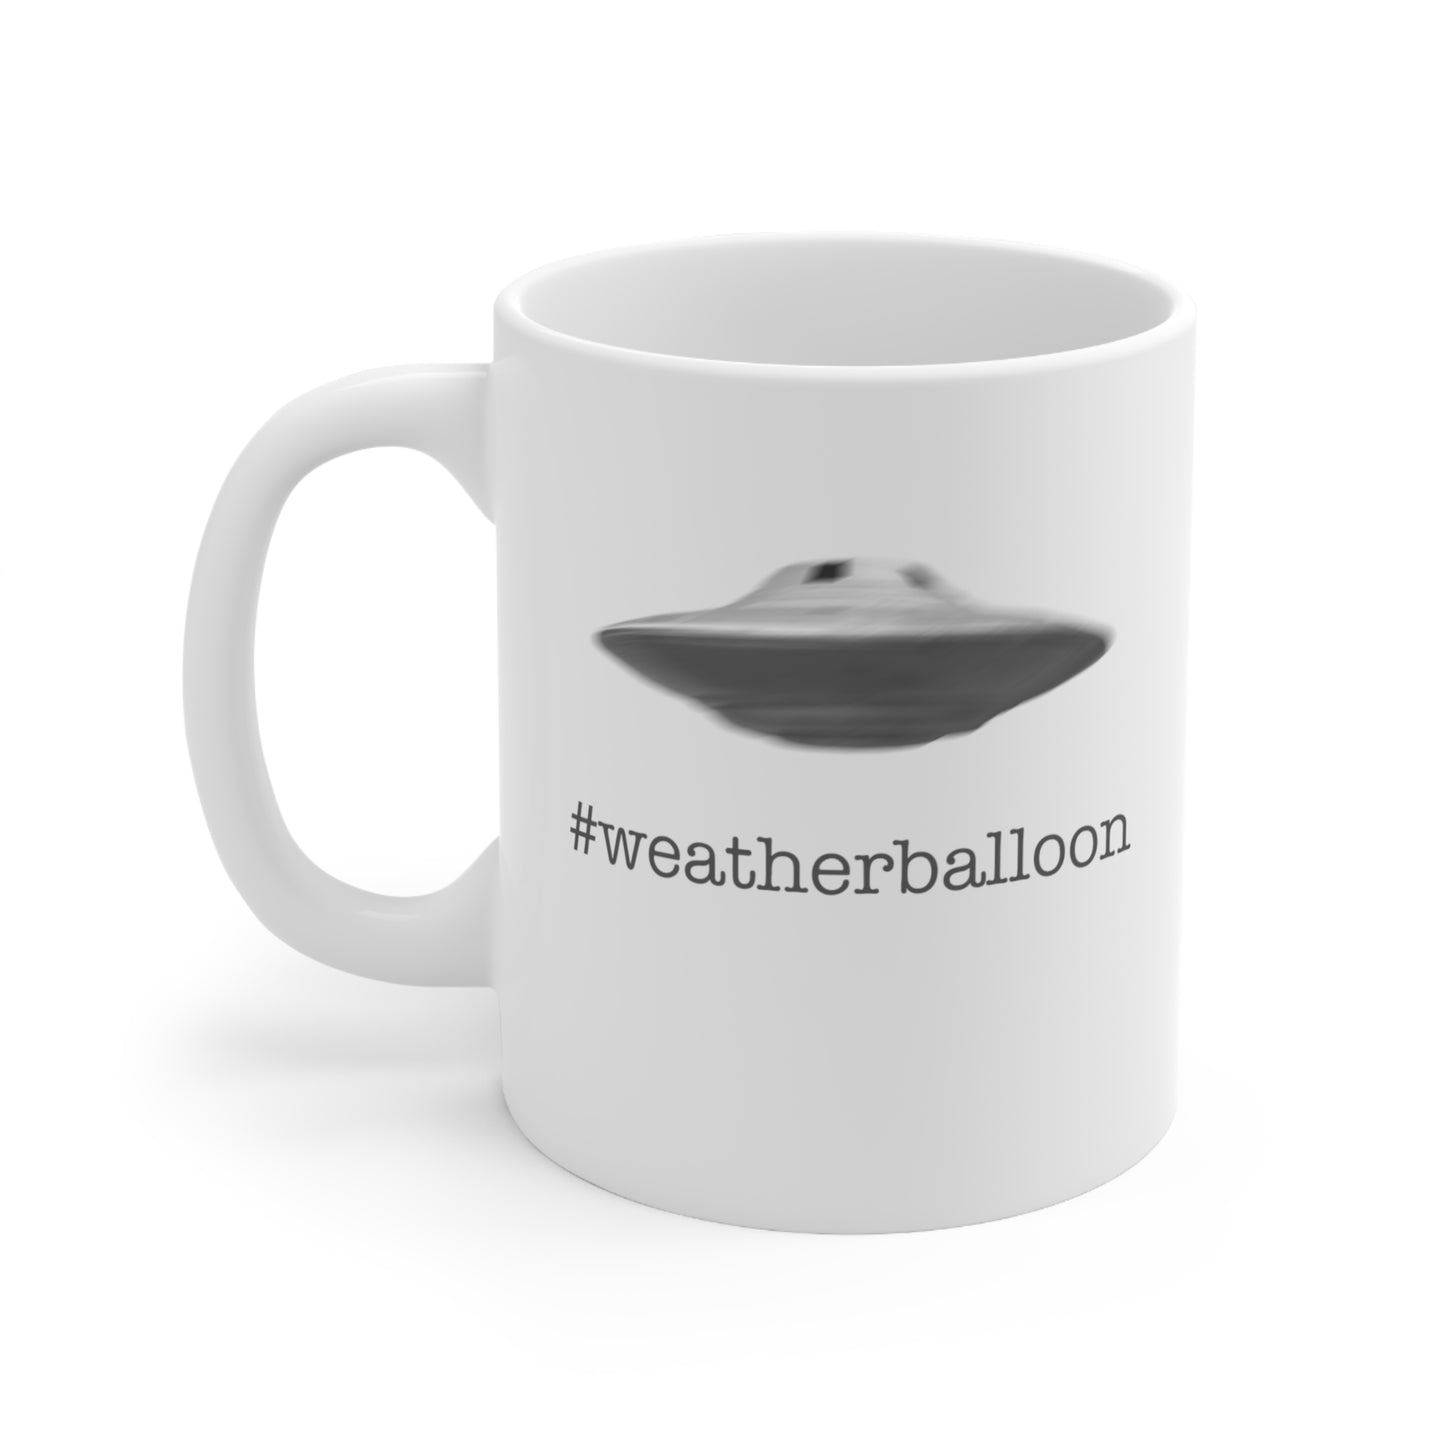 Alien / UFO / Weatherballoon? Novelty 11oz Coffee Mug.